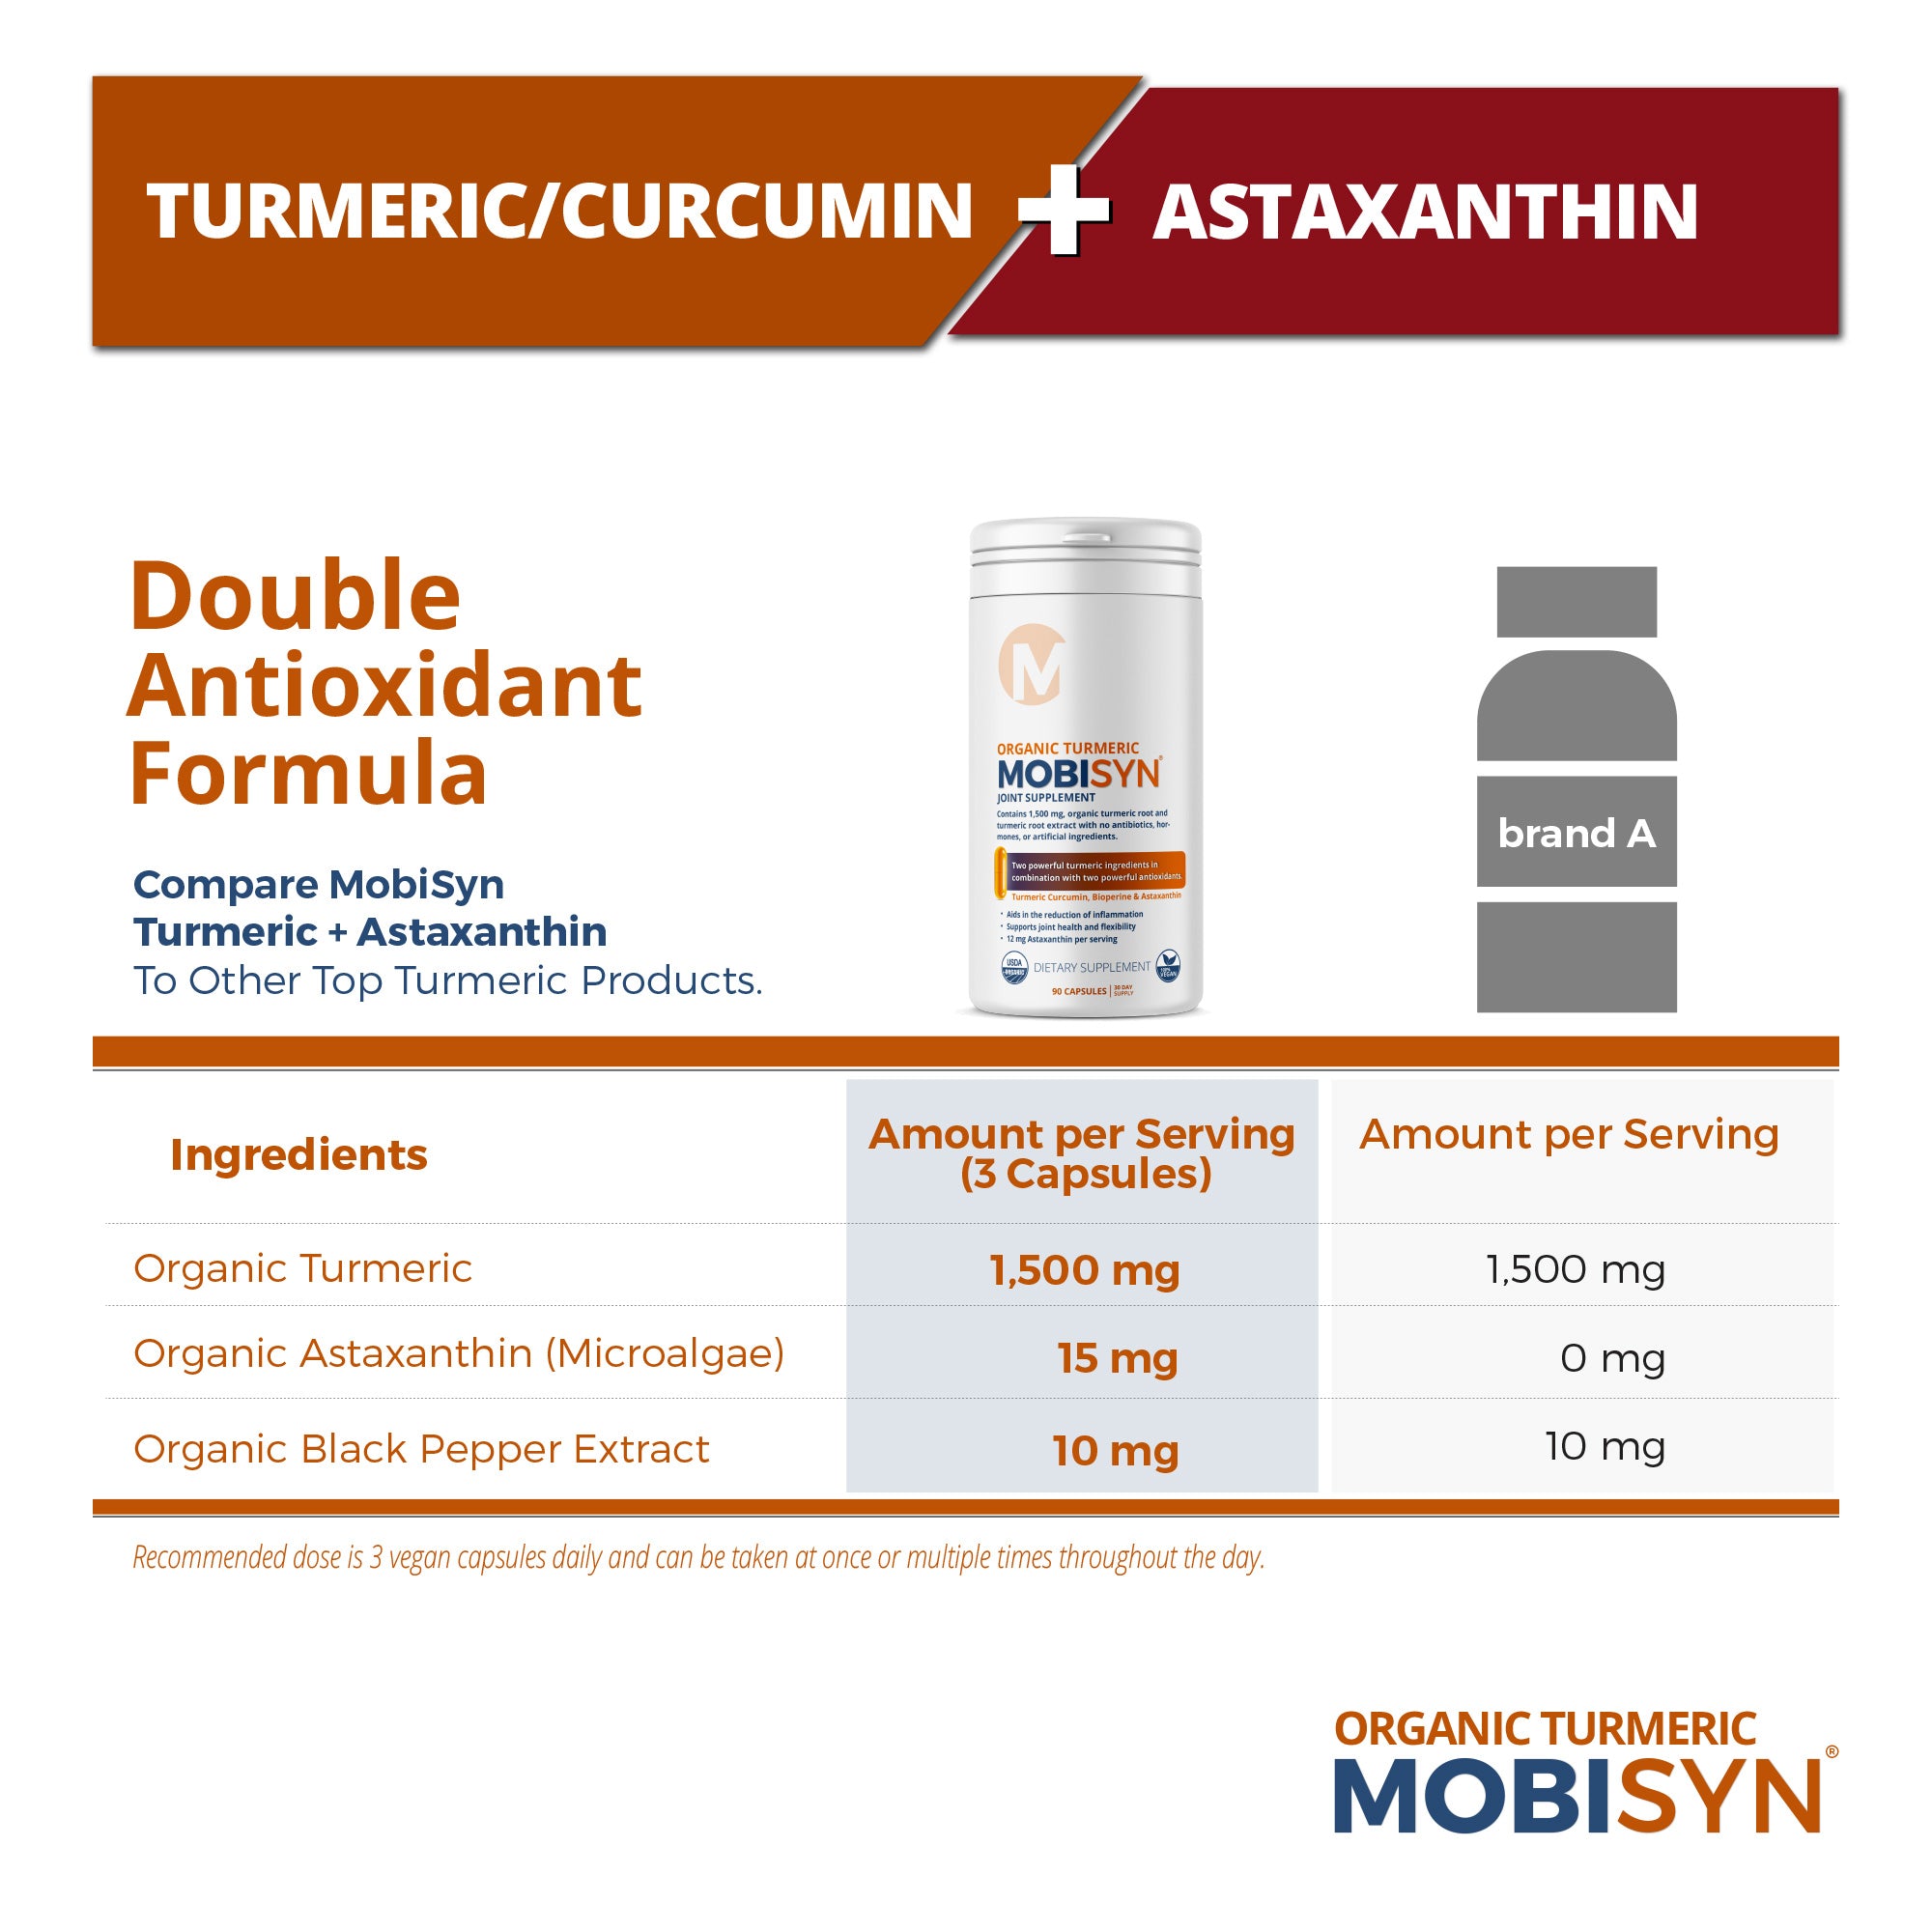 MobiSyn Organic Turmeric & Astaxanthin